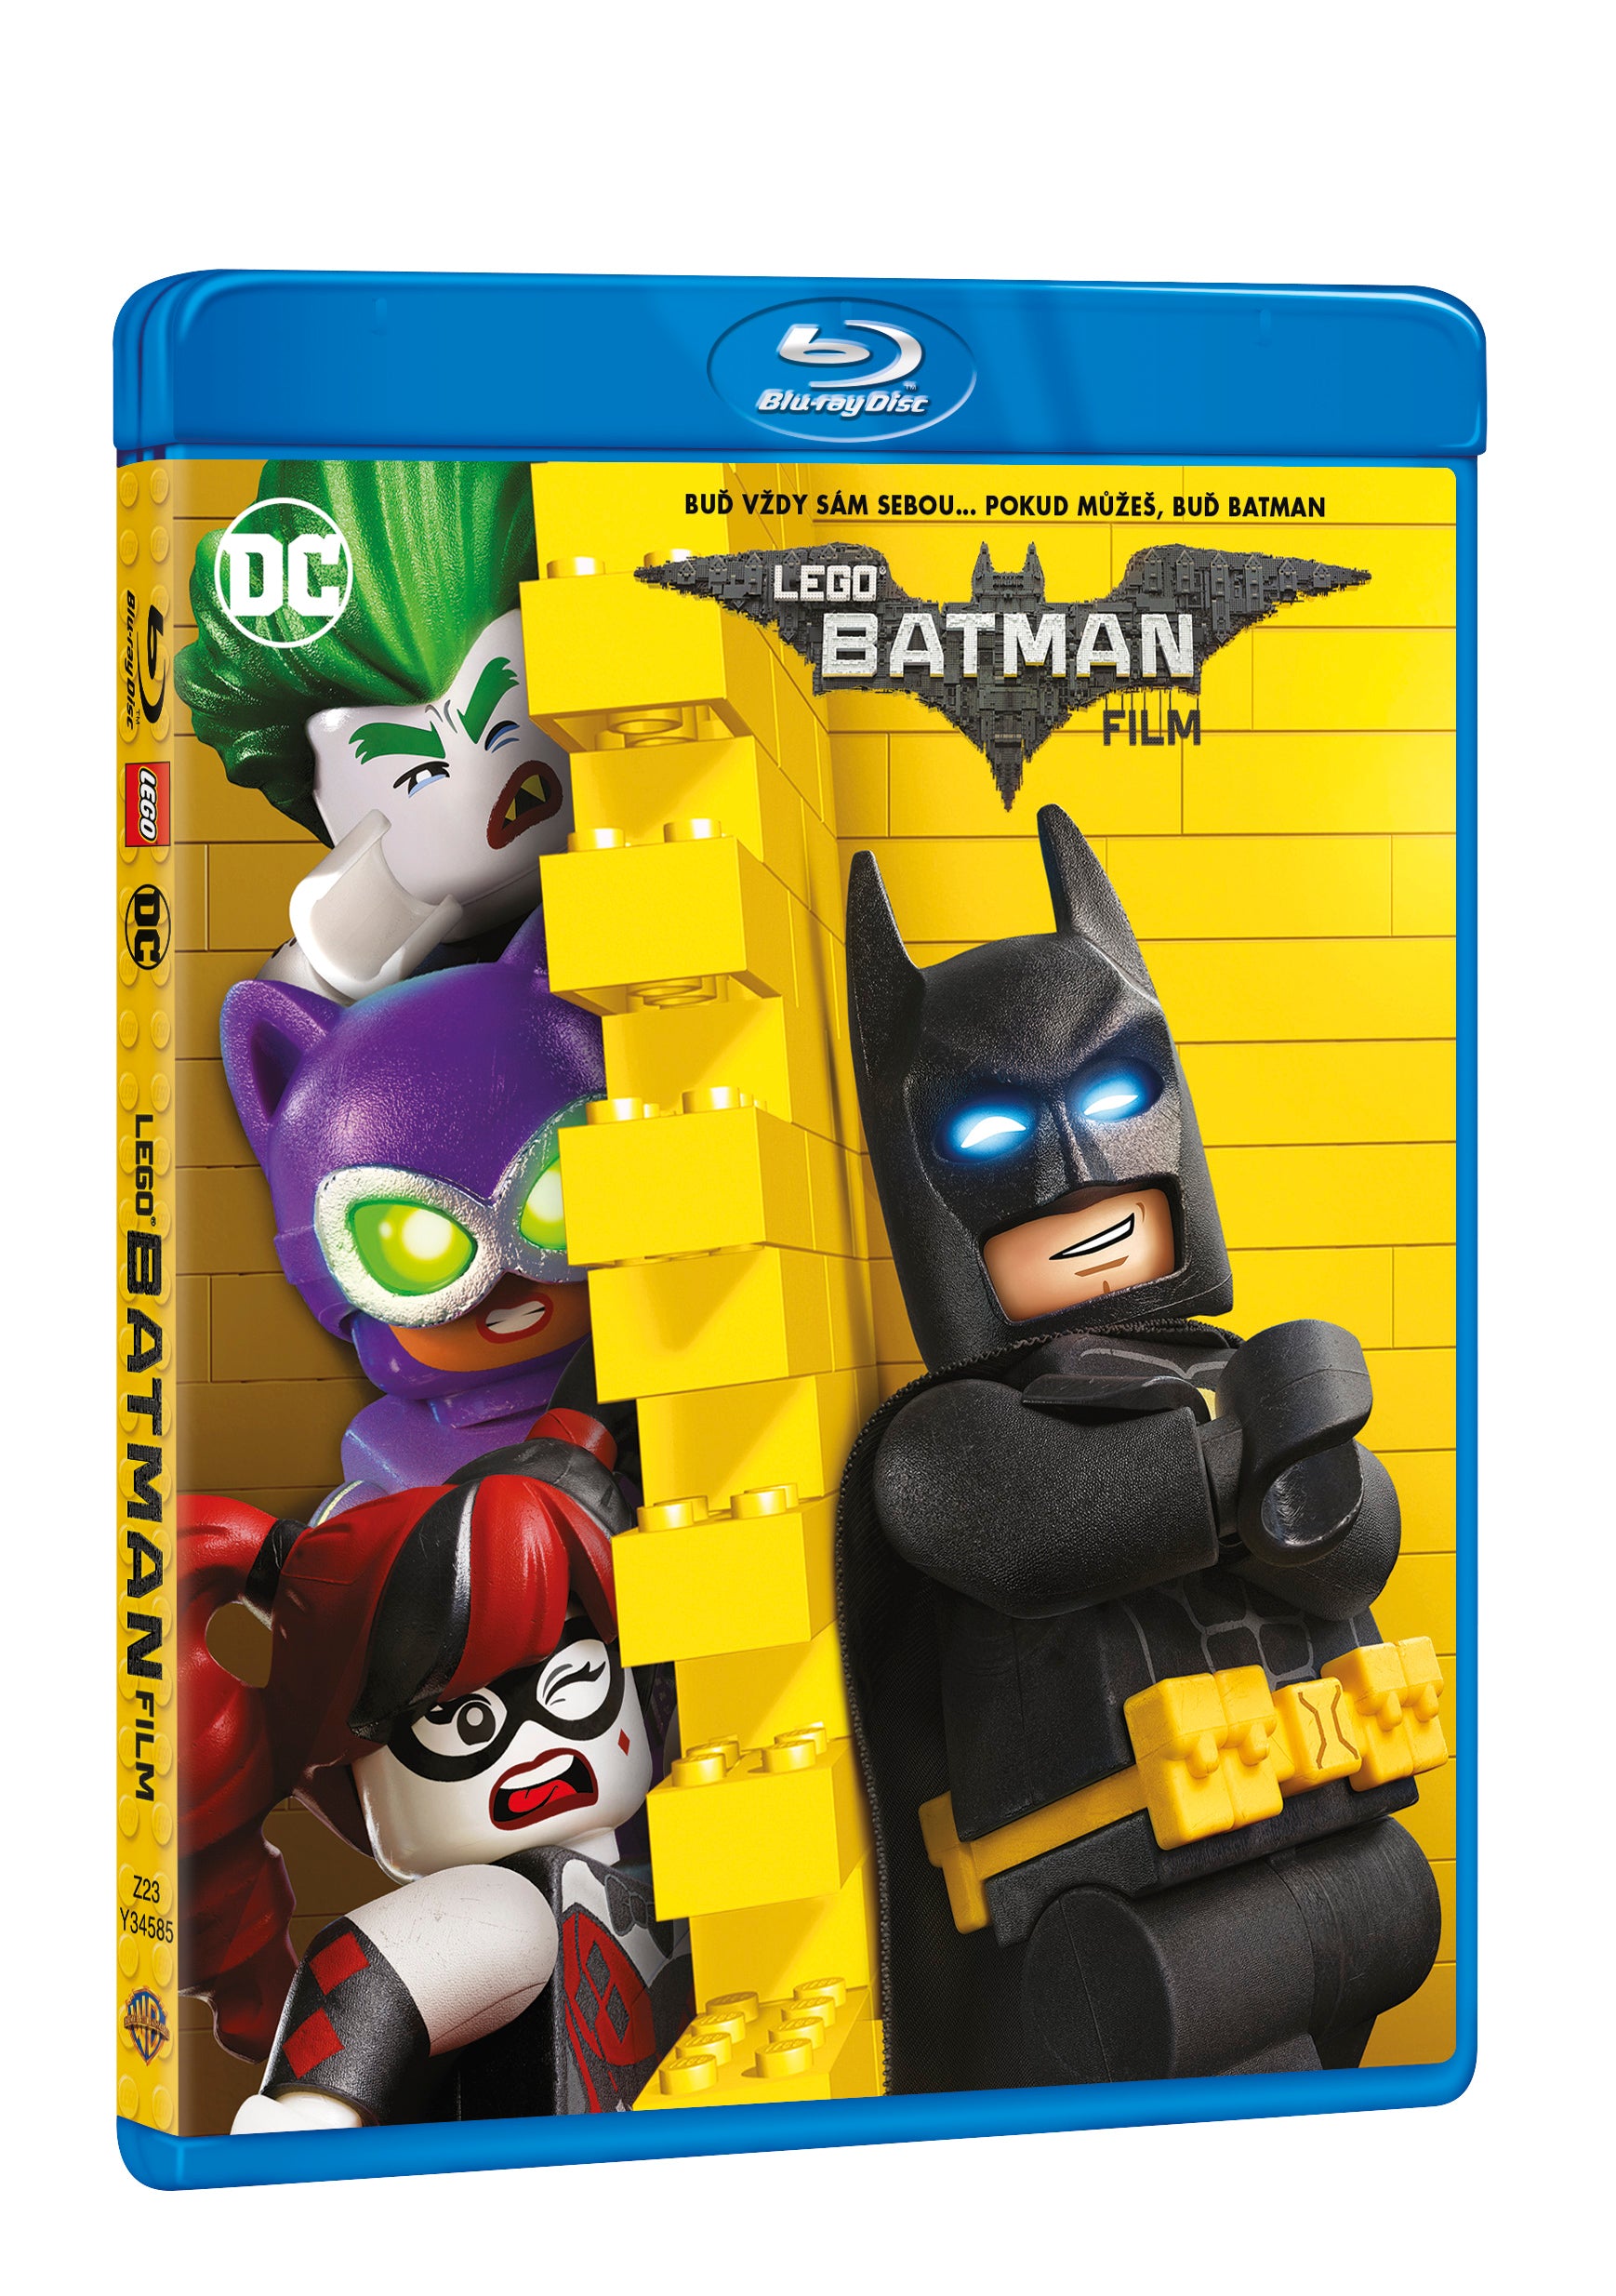 Lego Batman Film BD / The LEGO Batman Movie (czech version